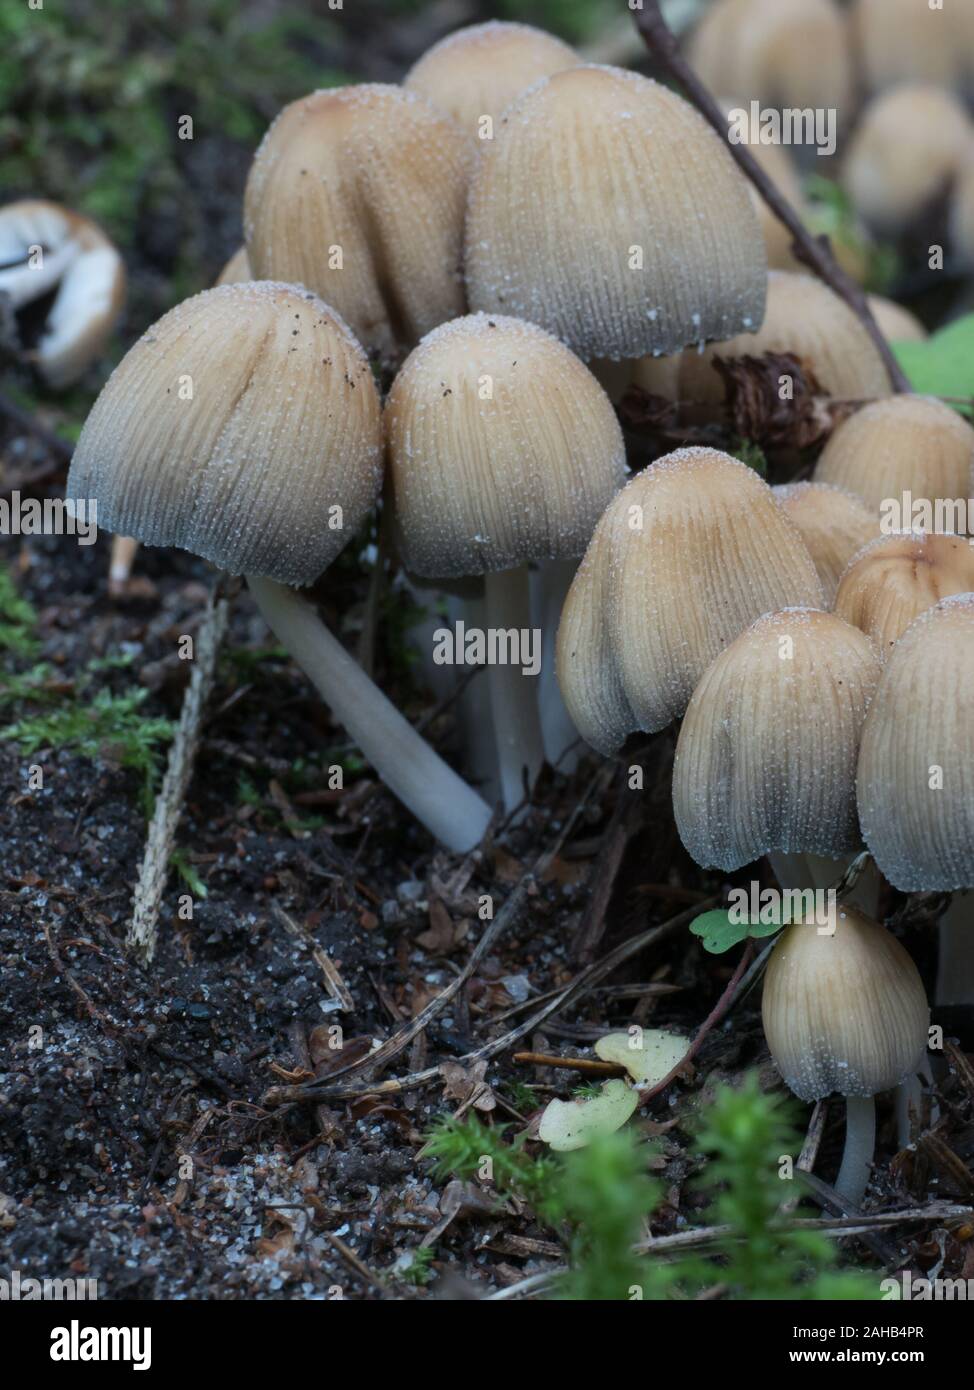 Coprinellus micaceus (Glistening inky cap) growing in Görvälns naturreservat, Sweden. Stock Photo